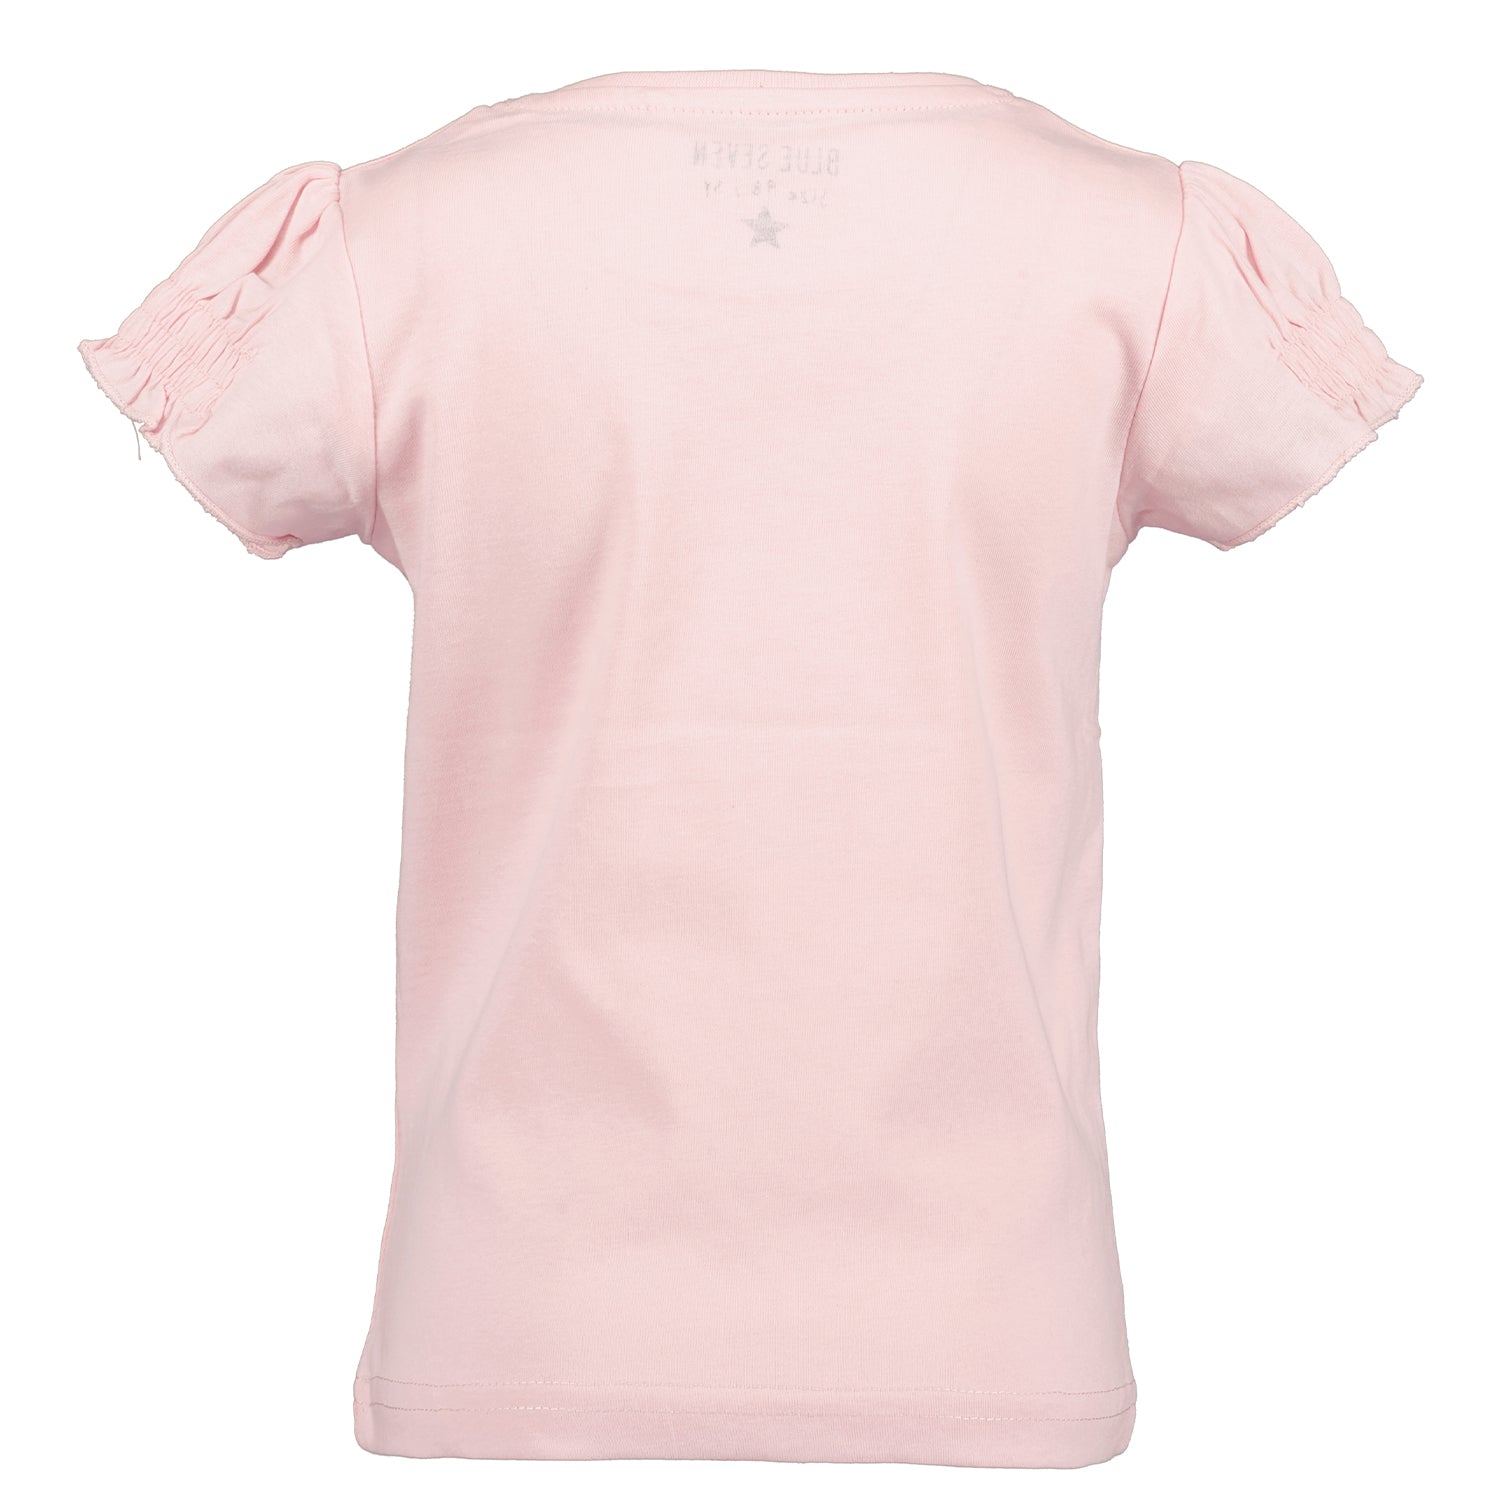 Pale Pink Horse T-Shirt